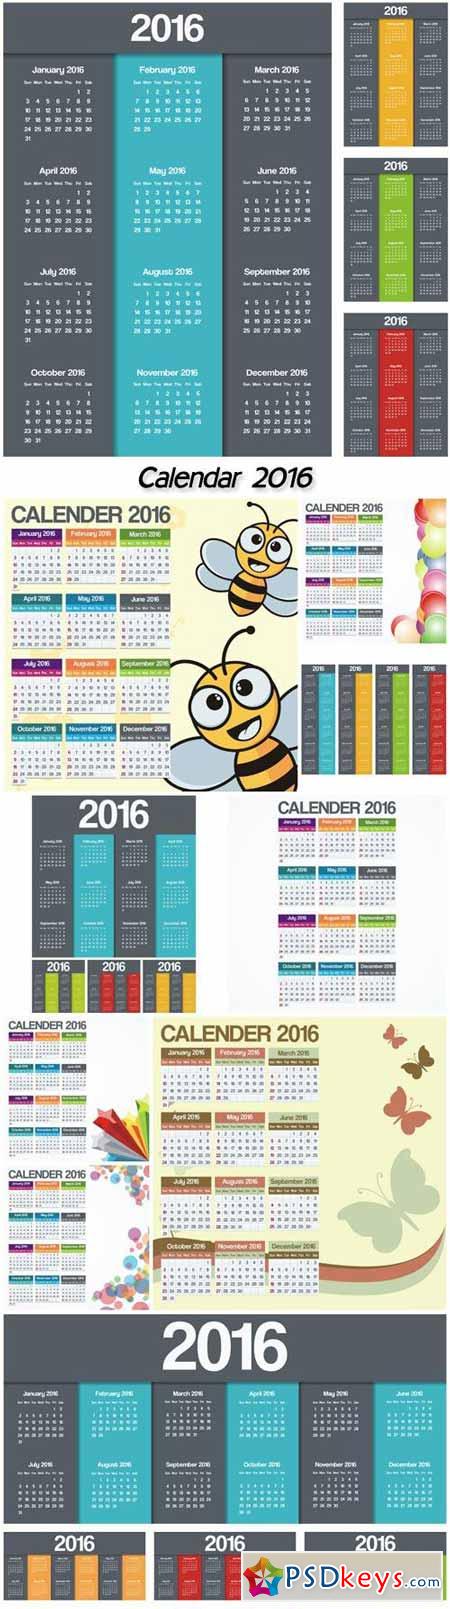 Calendar 2016, new year